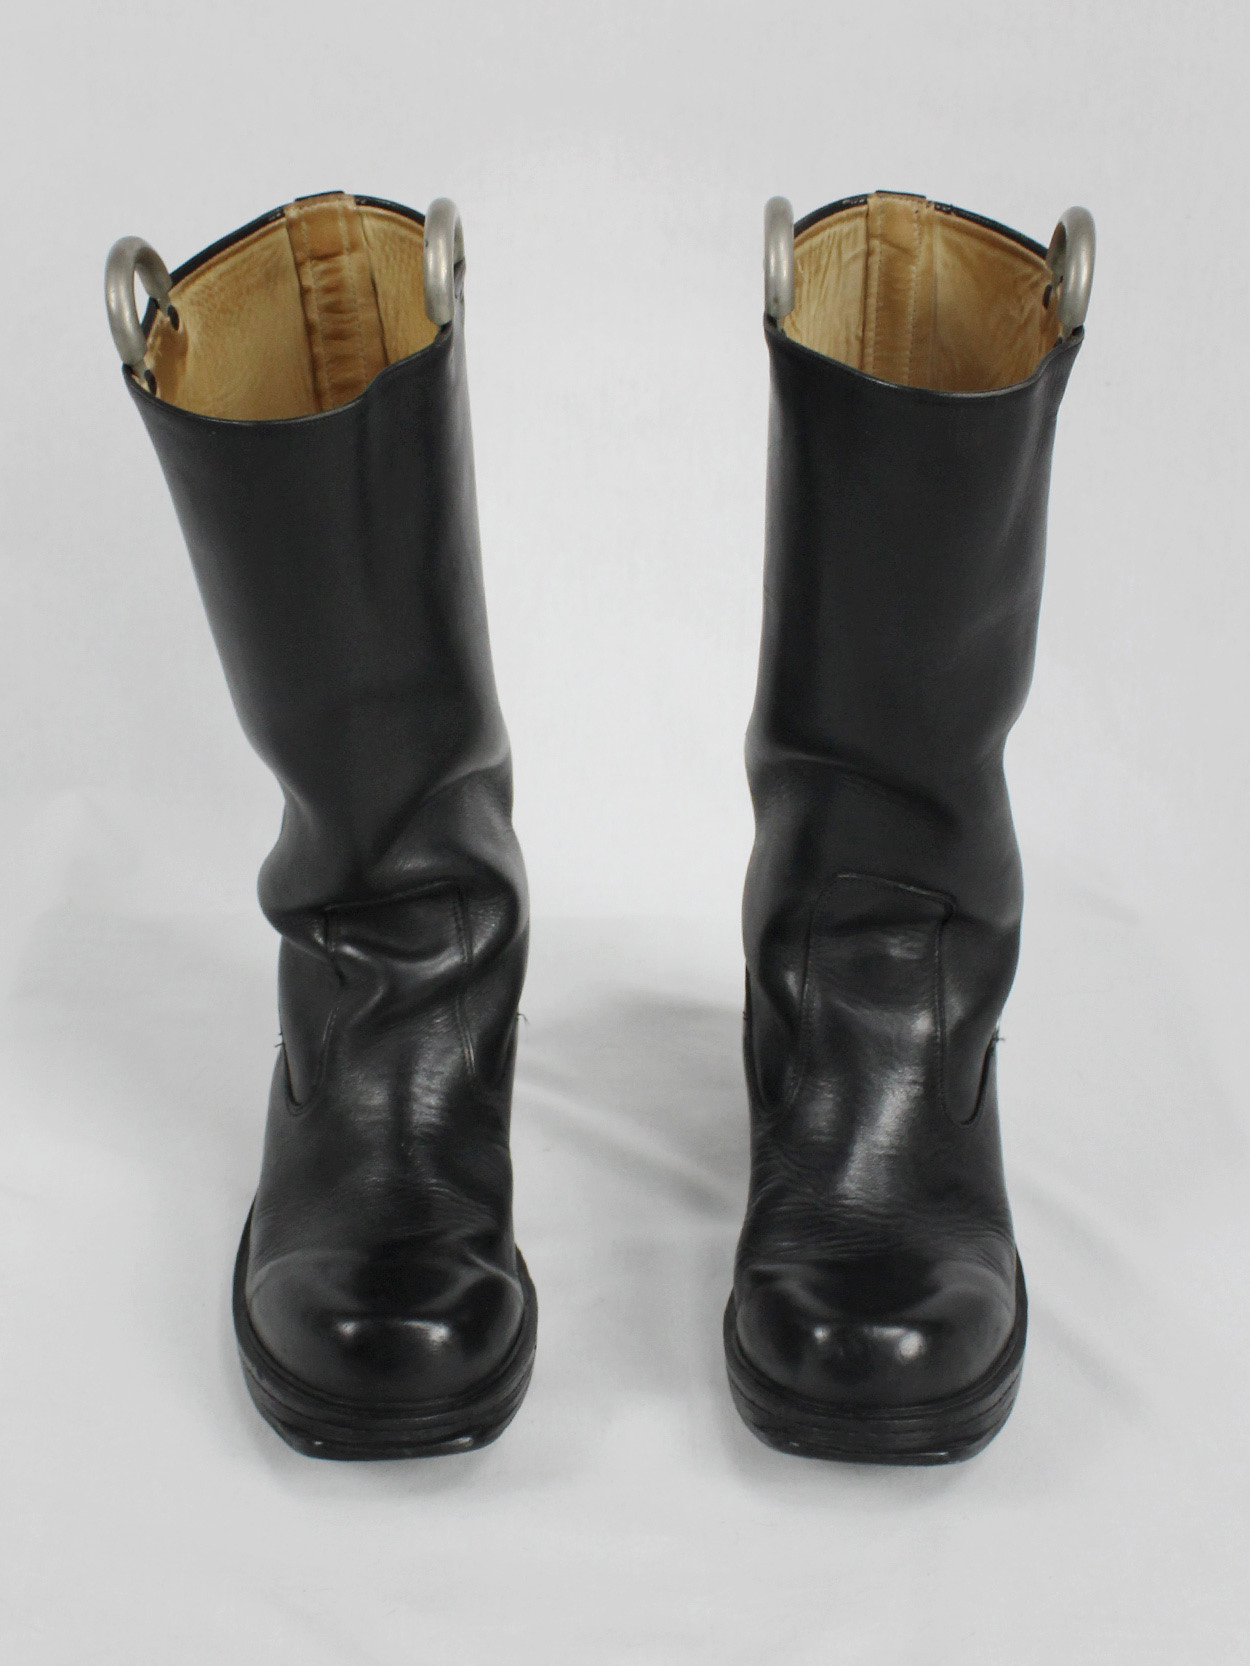 vaniitas vintage Dirk Bikkembergs black tall boots with metal heel and metal pulls 1990s 90s archive 5118